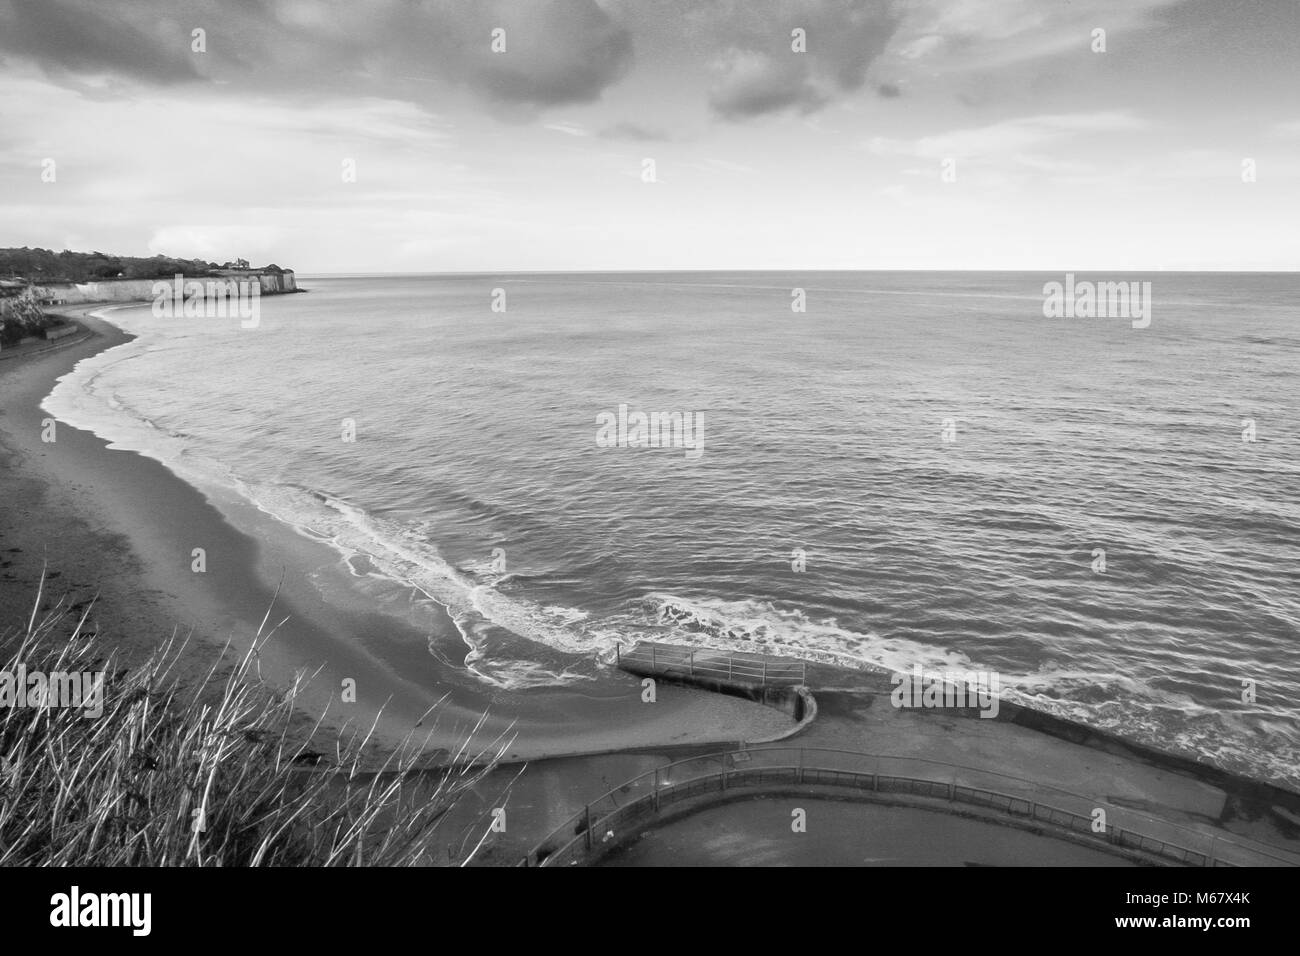 Stormy seas and choppy waves Black and white image of Broadstairs coastline, Kent, UK Stock Photo